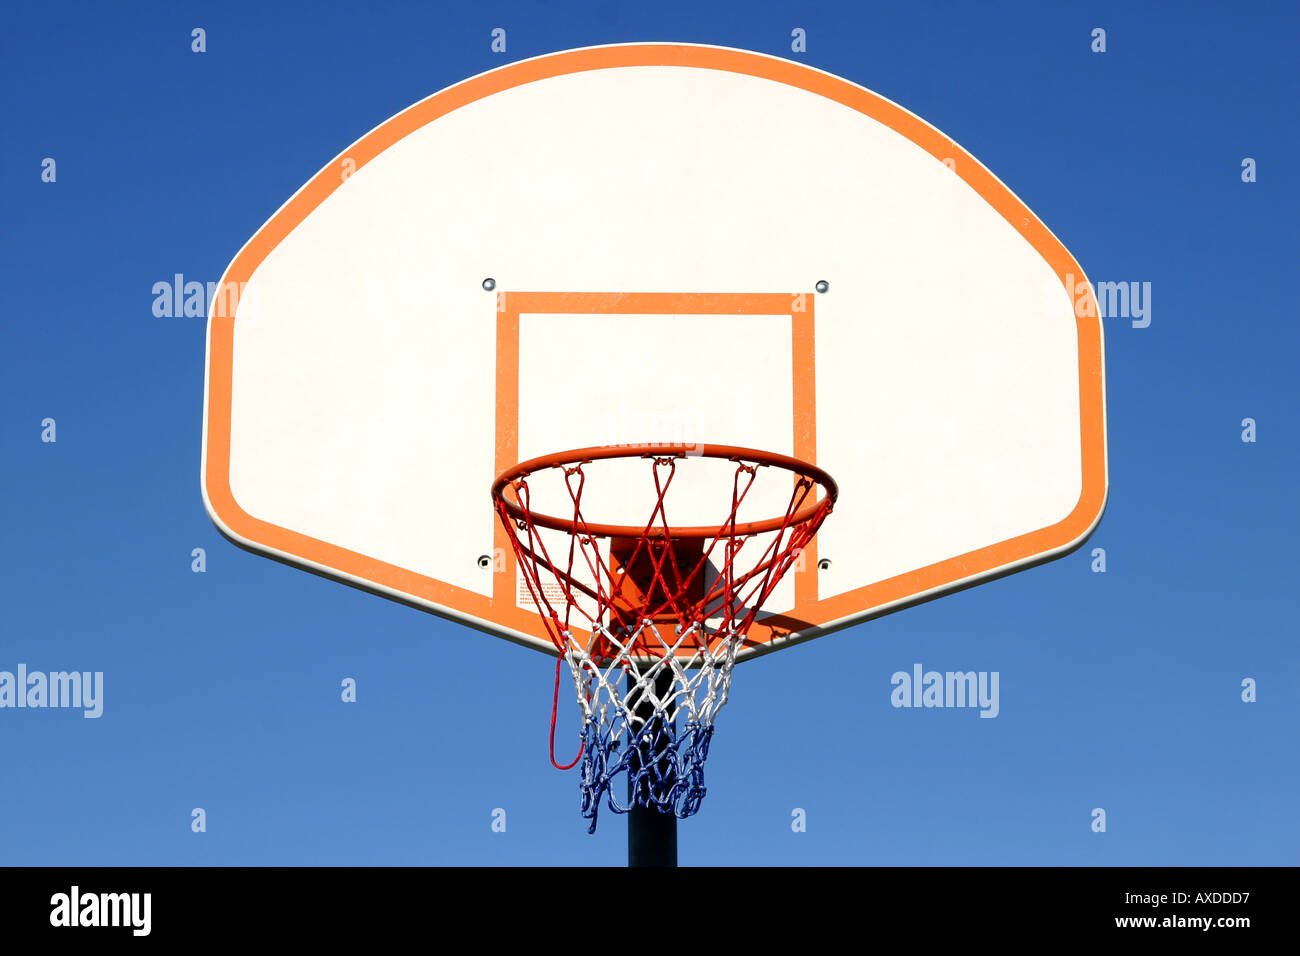 Basketball basket against a clear blue sky Stock Photo